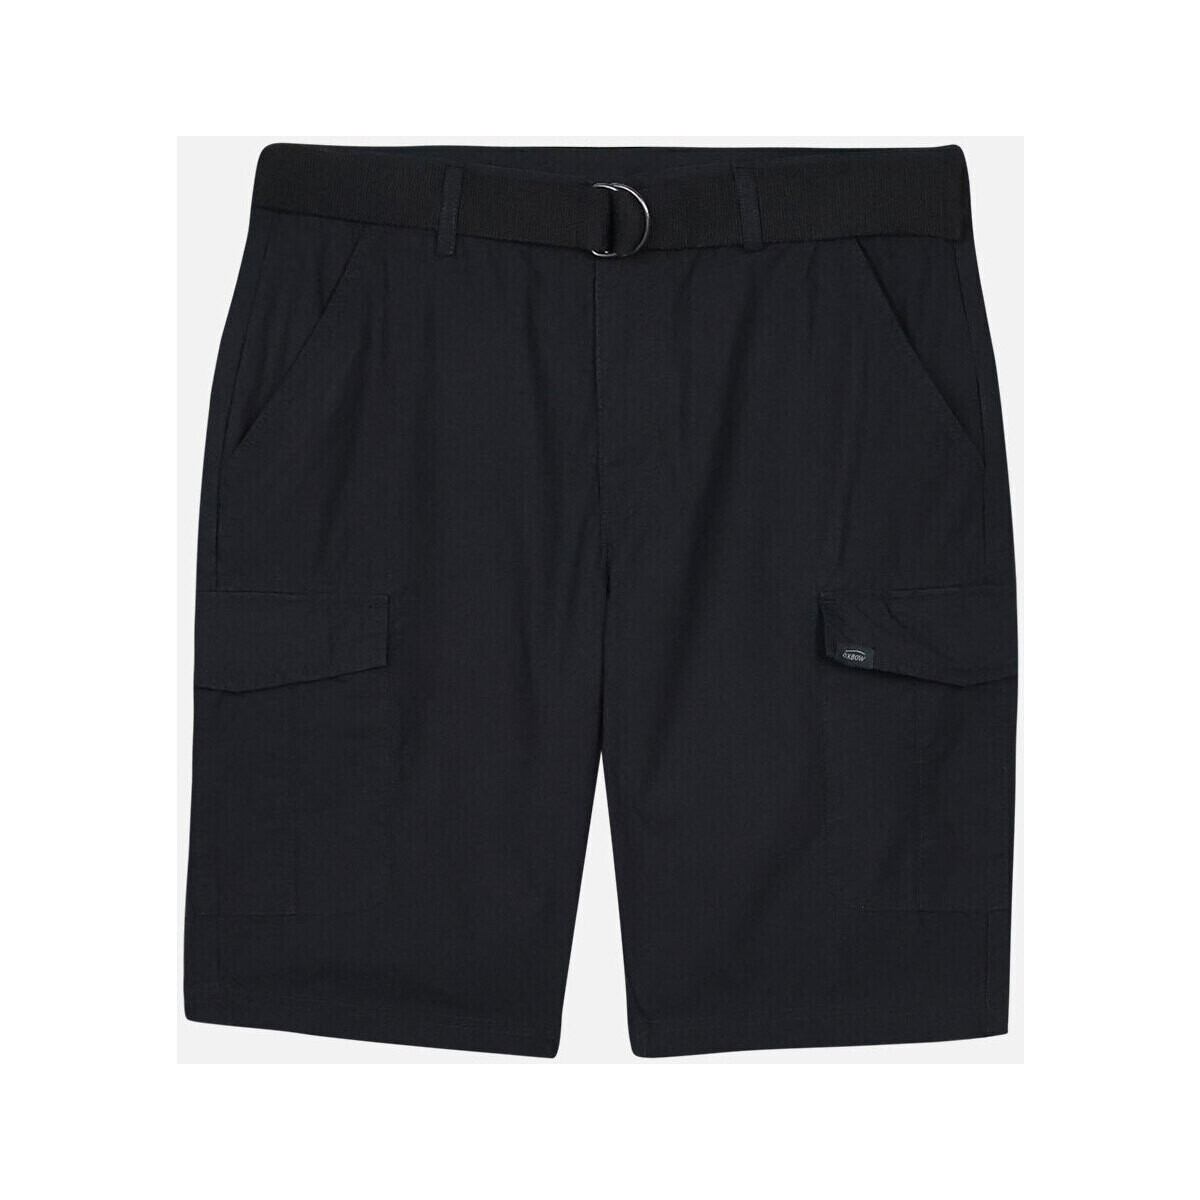 Textil Homem Shorts / Bermudas Oxbow Short ORAGO Preto